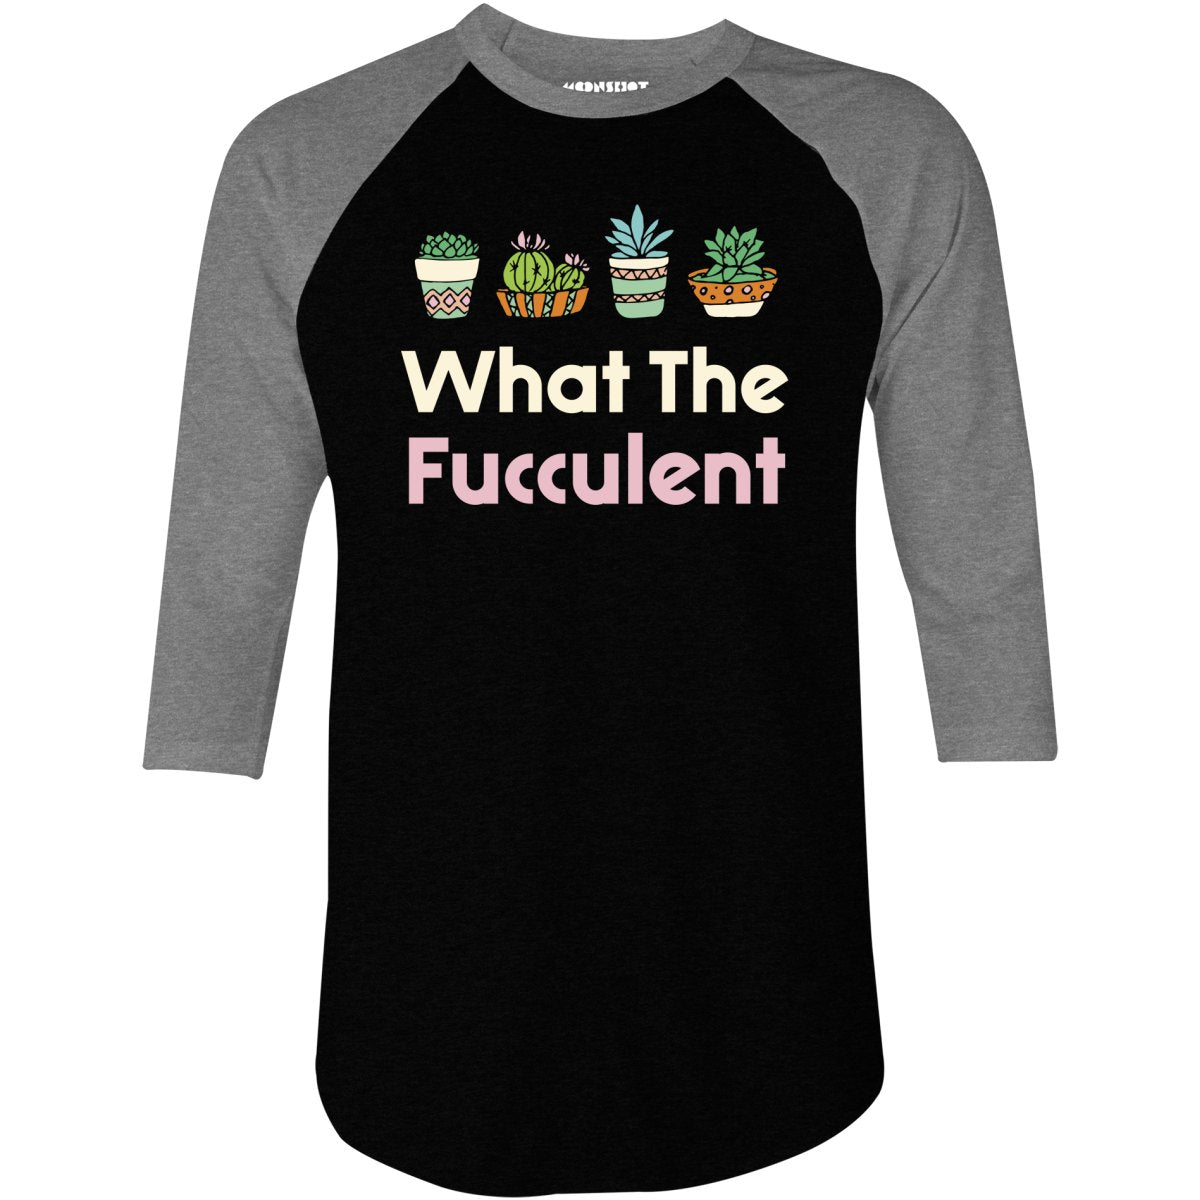 What The Fucculent - 3/4 Sleeve Raglan T-Shirt